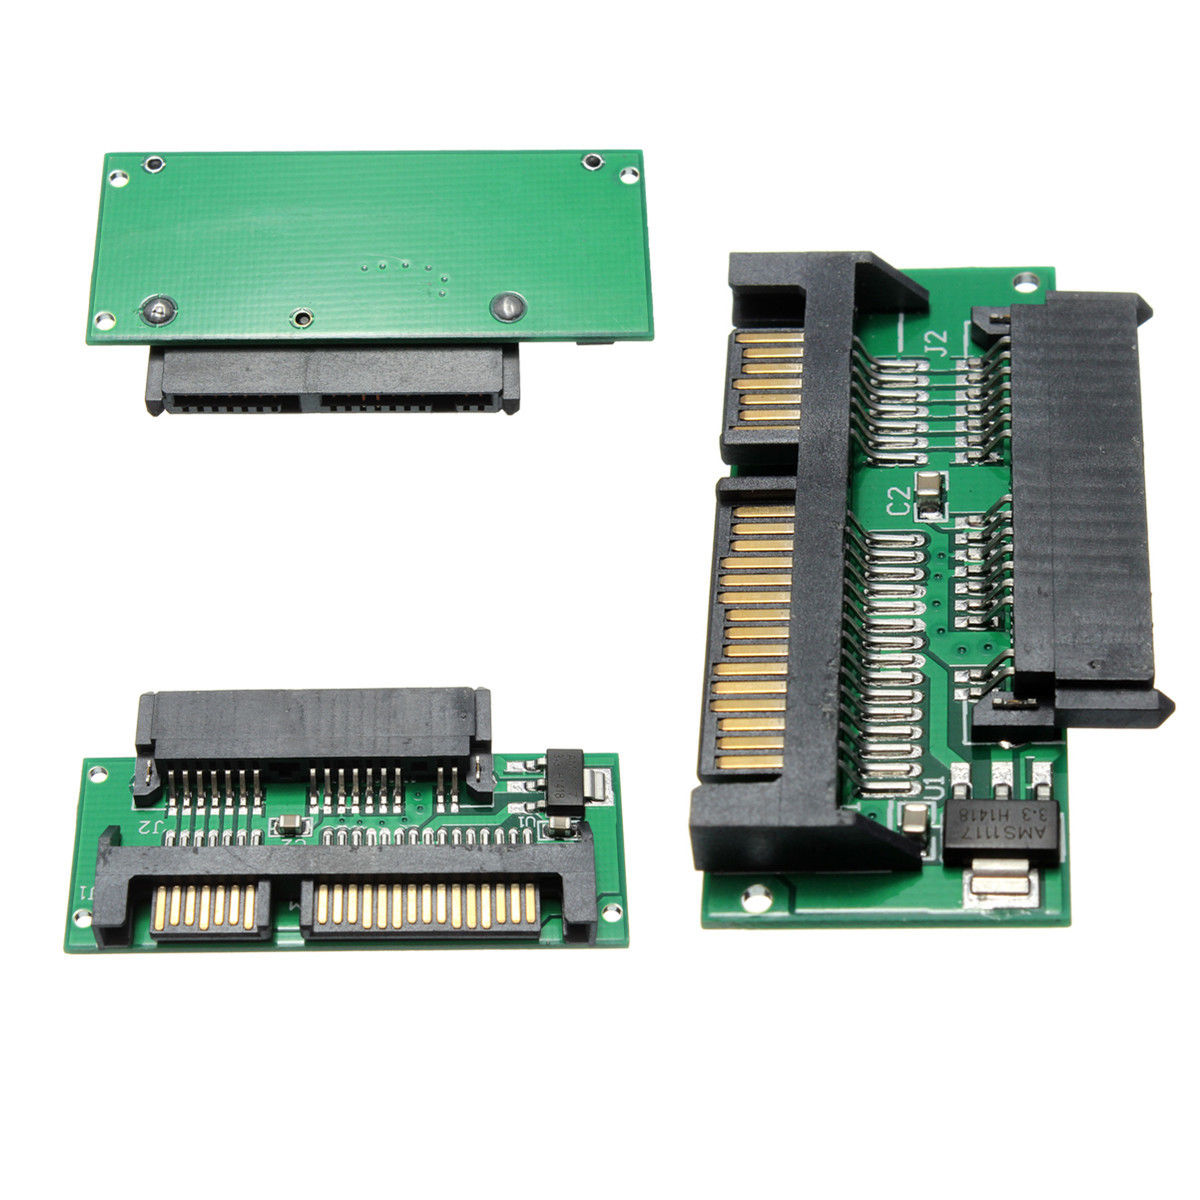 Купить m sata. Micro SATA SSD 1.8. 1.8" Micro SATA HDD. M2 SATA переходник SATA 2.5. Адаптер 1.8" Micro SATA для подключения к разъему 2.5" SATA SSD.